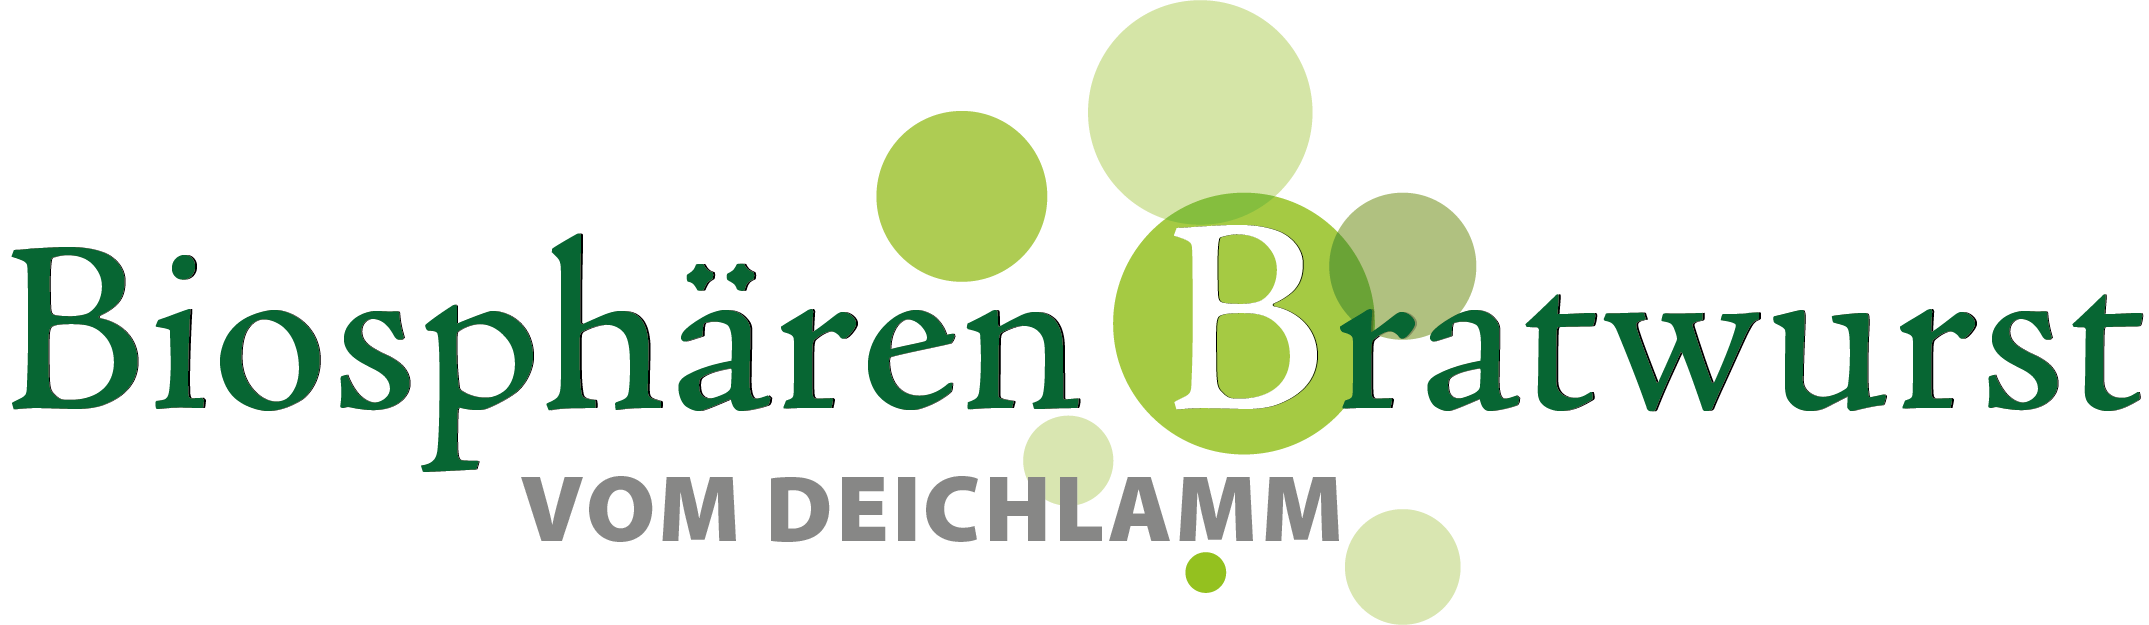 Logo Biosphären-Bratwurst vom Deichlamm